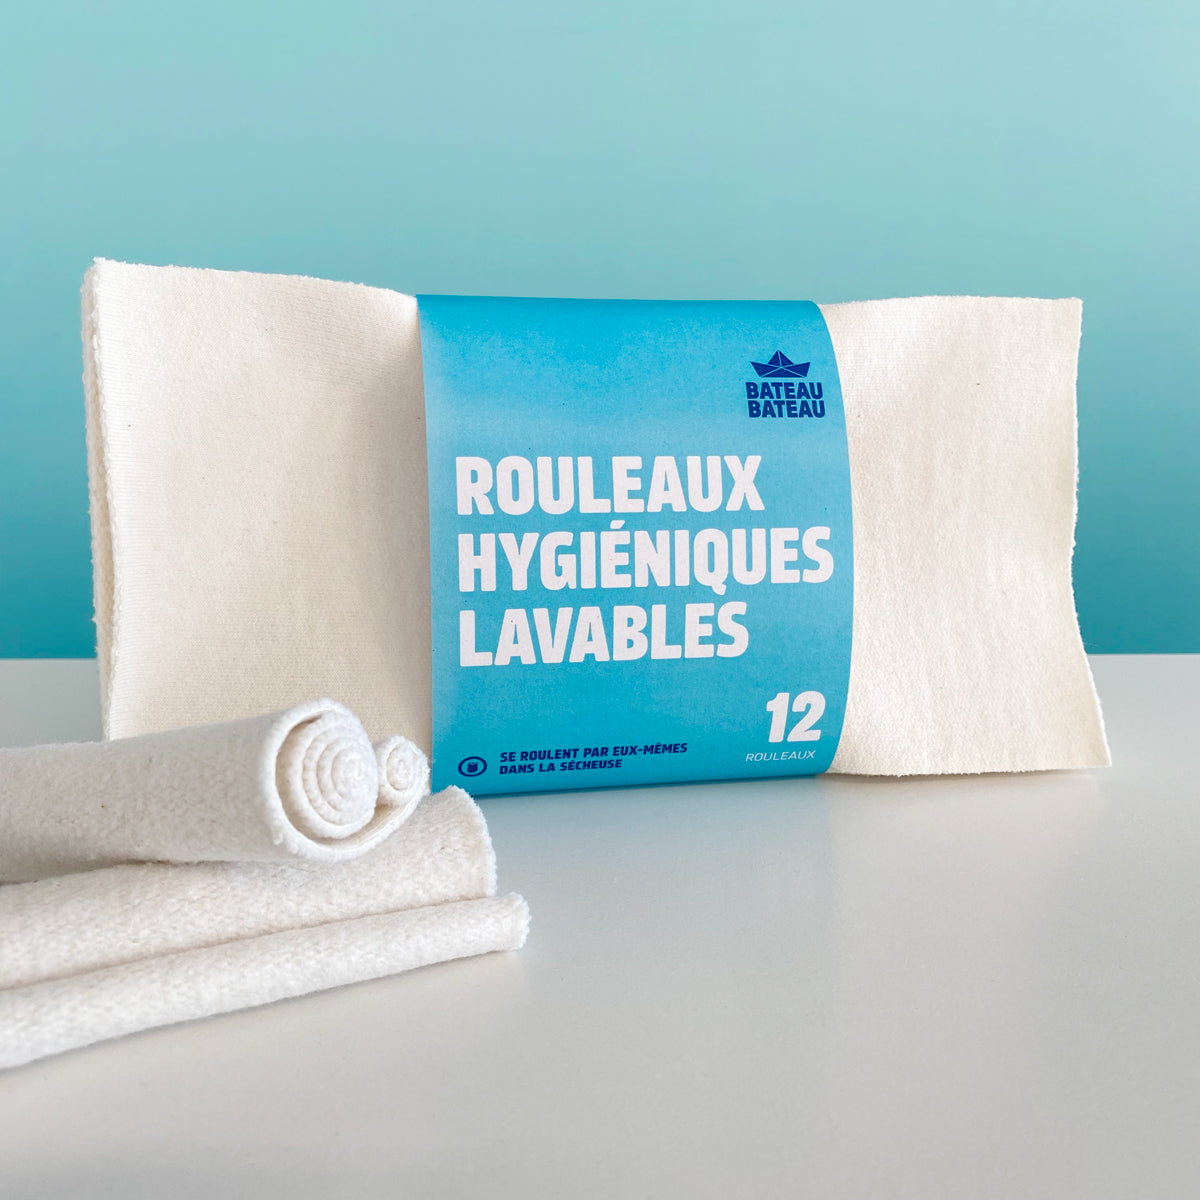 12 rolls of white reusable toilet paper